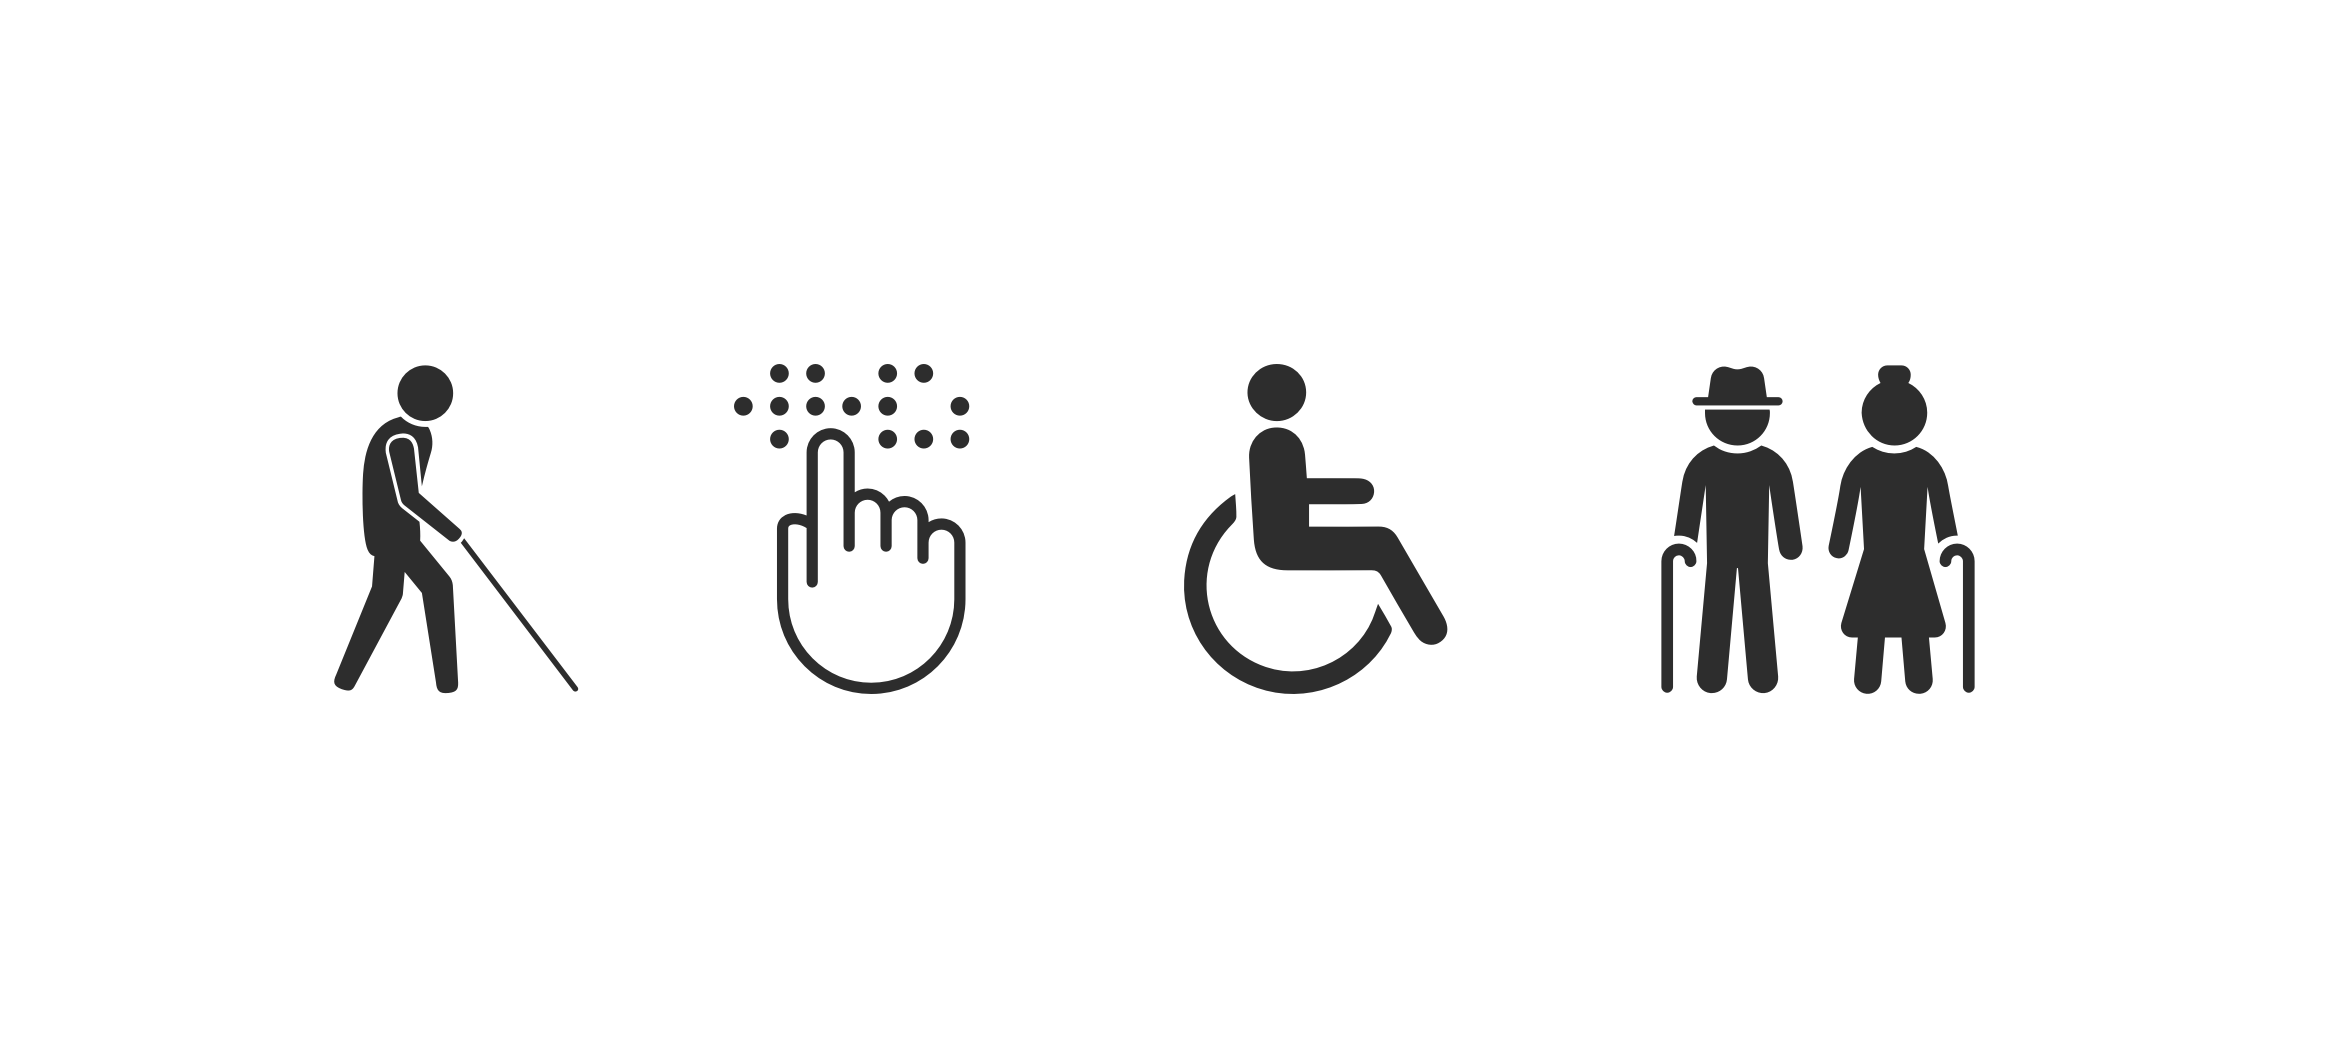 Blind icon, braille icon, wheelchair icon and elderly couple icon